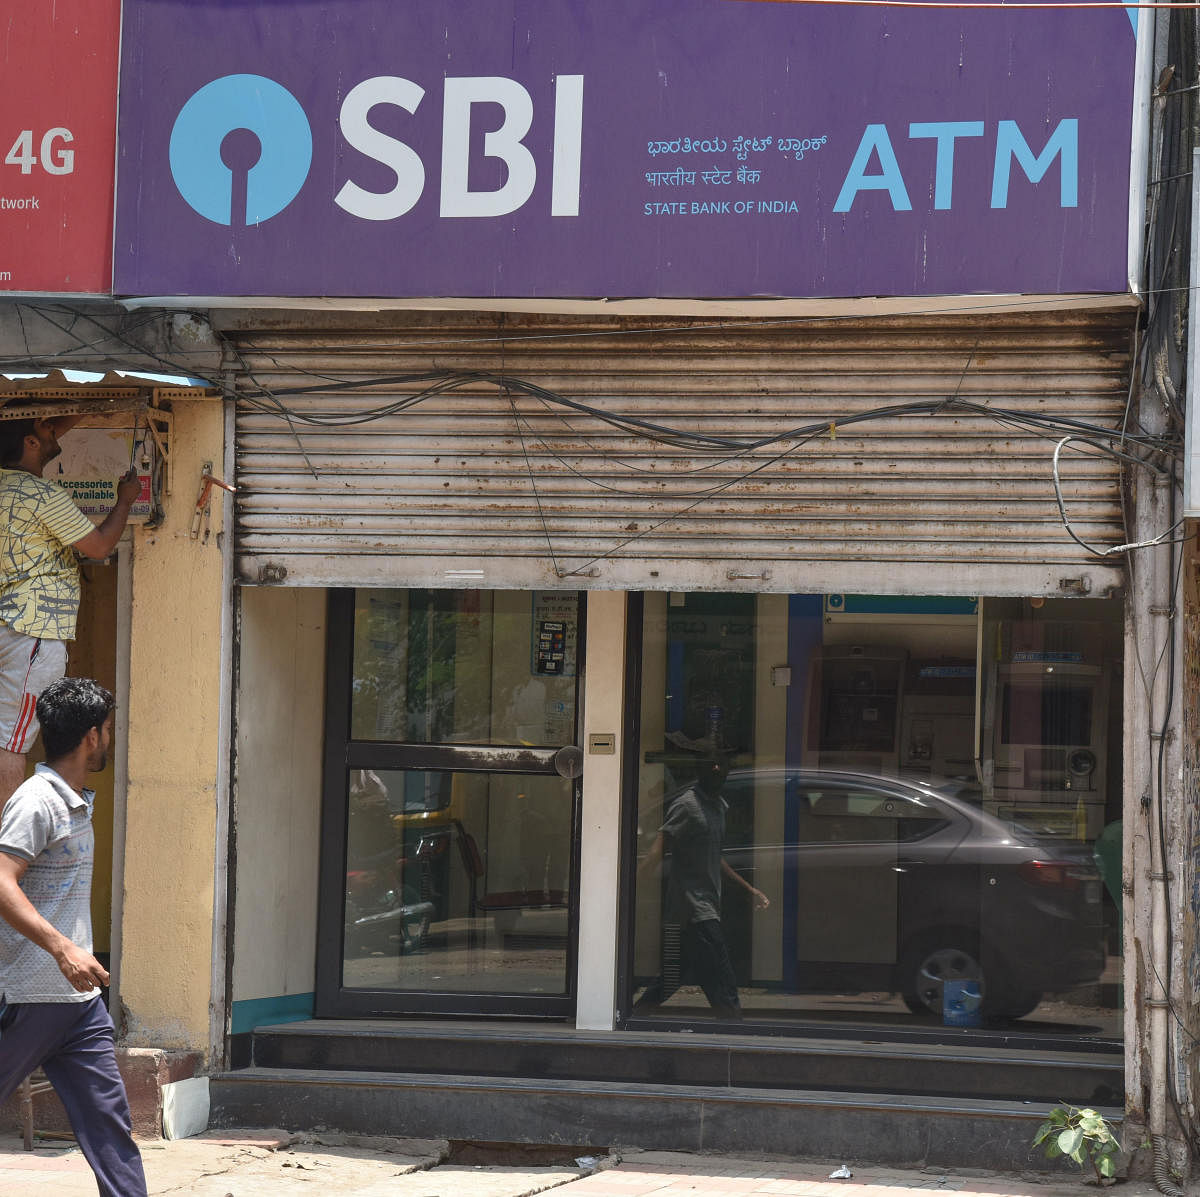 ATM is closed, at Gandhinagar in Bengaluru. Photo by S K Dinesh